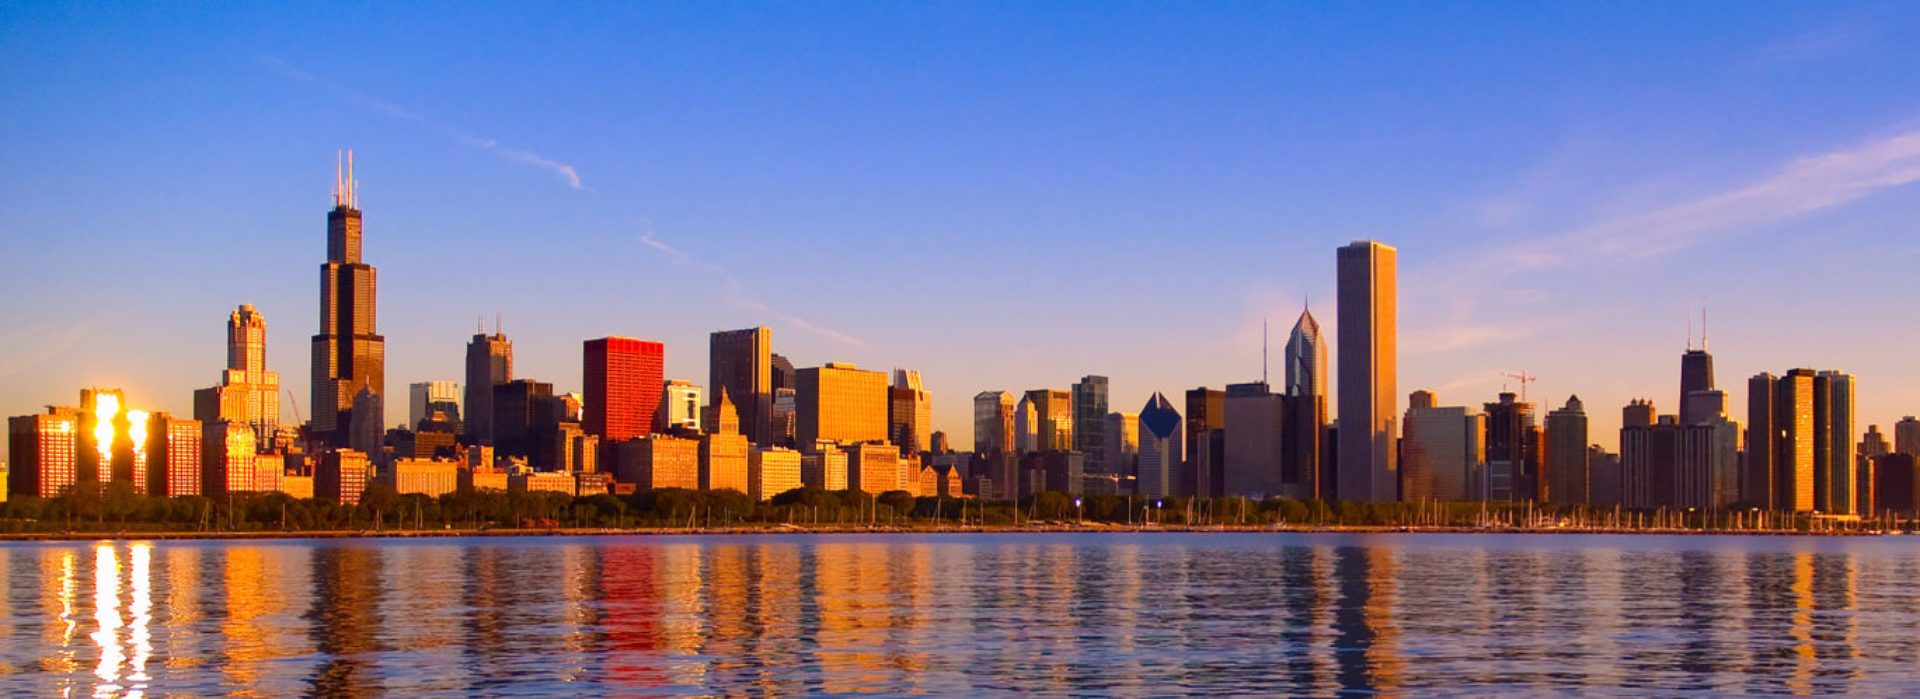 cropped-cropped-Chicago-skyline-from-Adler-Planetarium-sunrise-3.jpg ...